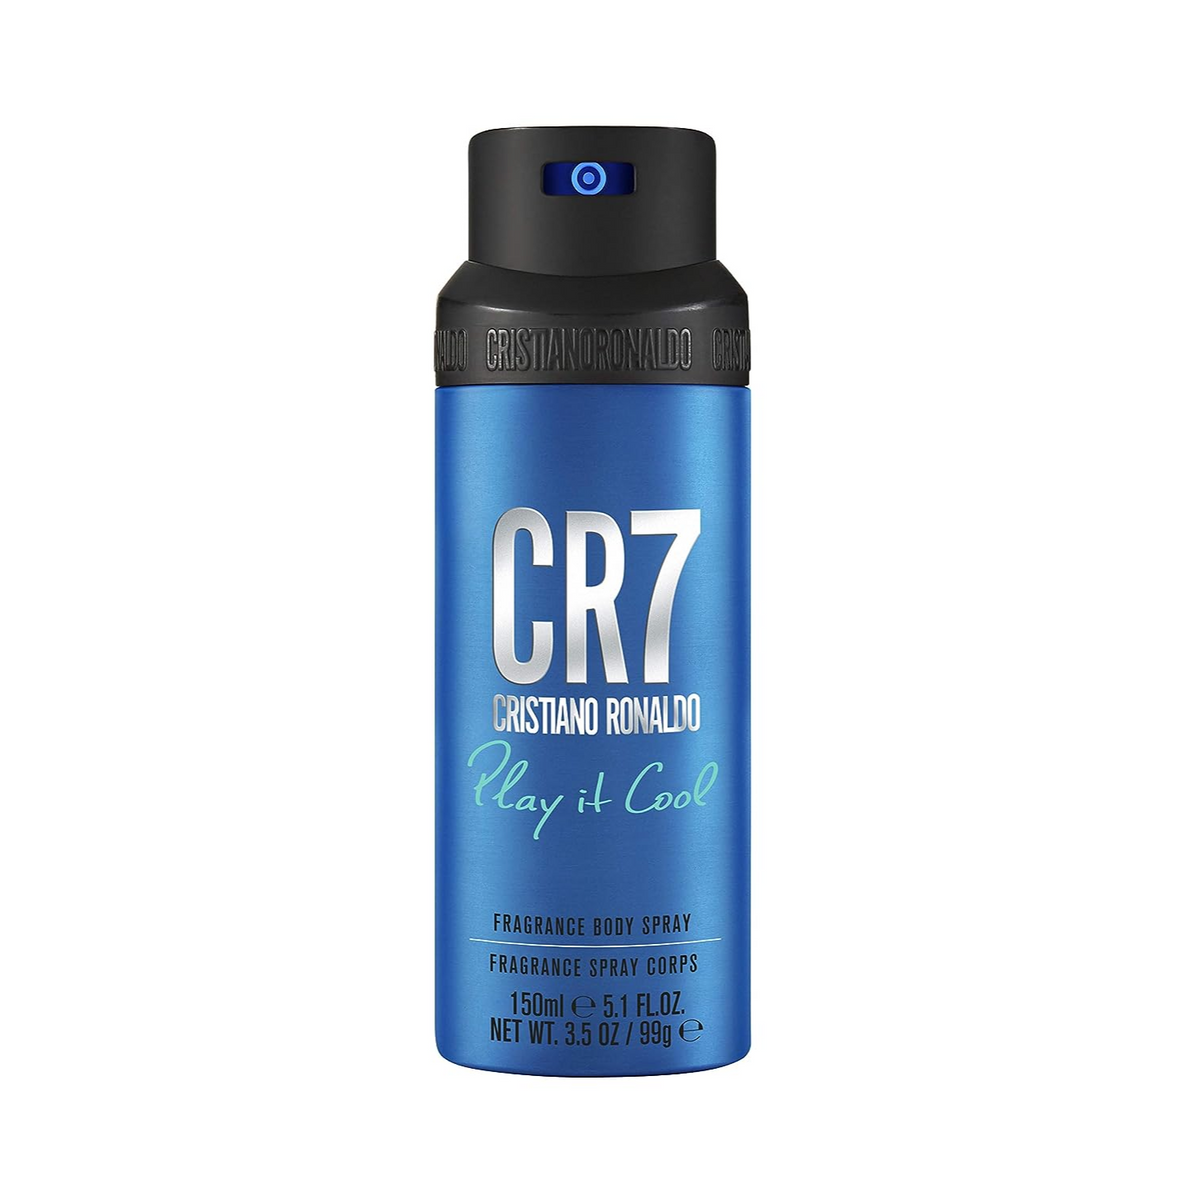 Cristiano Ronaldo CR7 Play It Cool Fragrance Body Spray (150ml) Cristiano Ronaldo